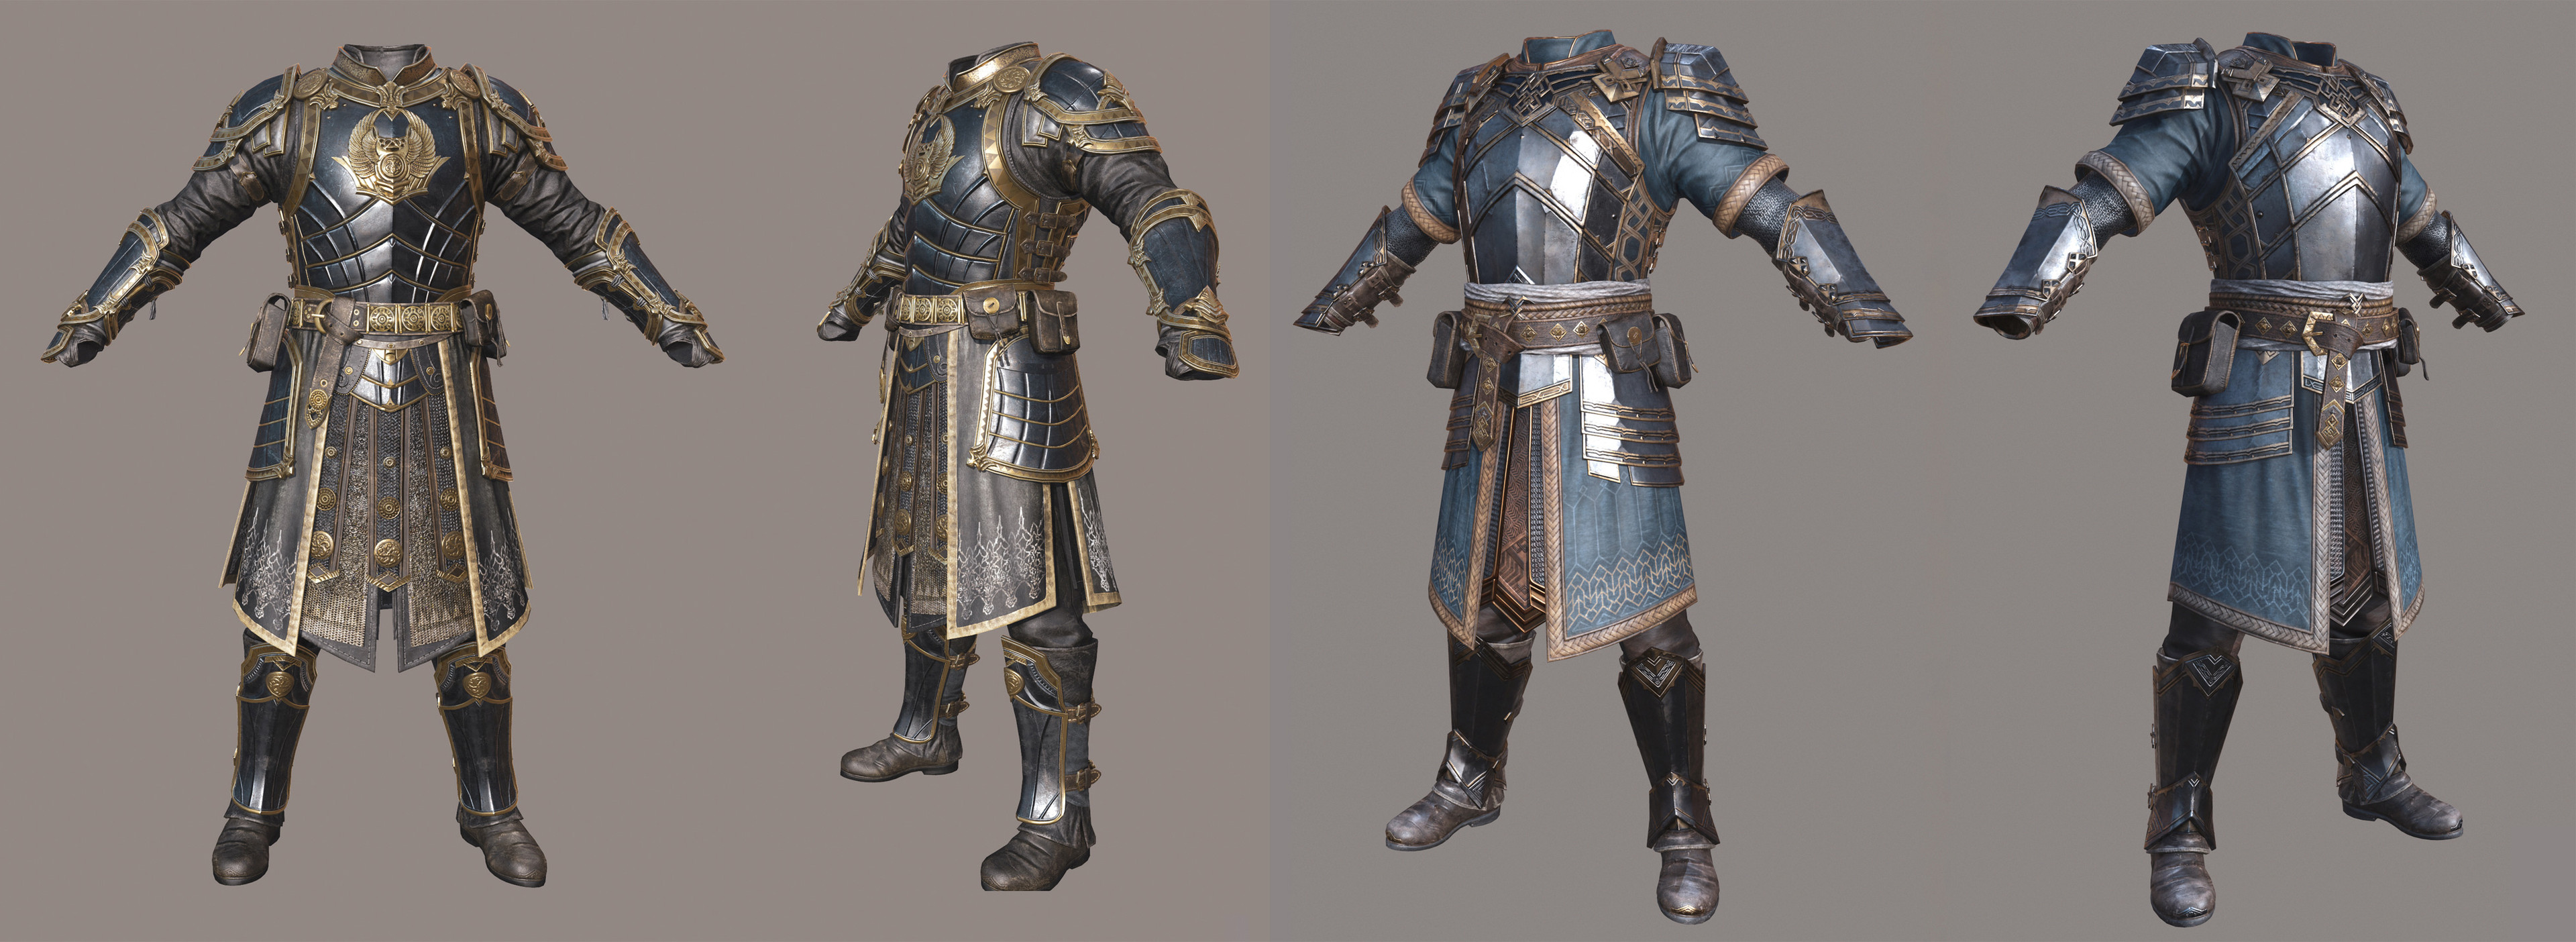 Númenórean and Dwarven hero armor sets.